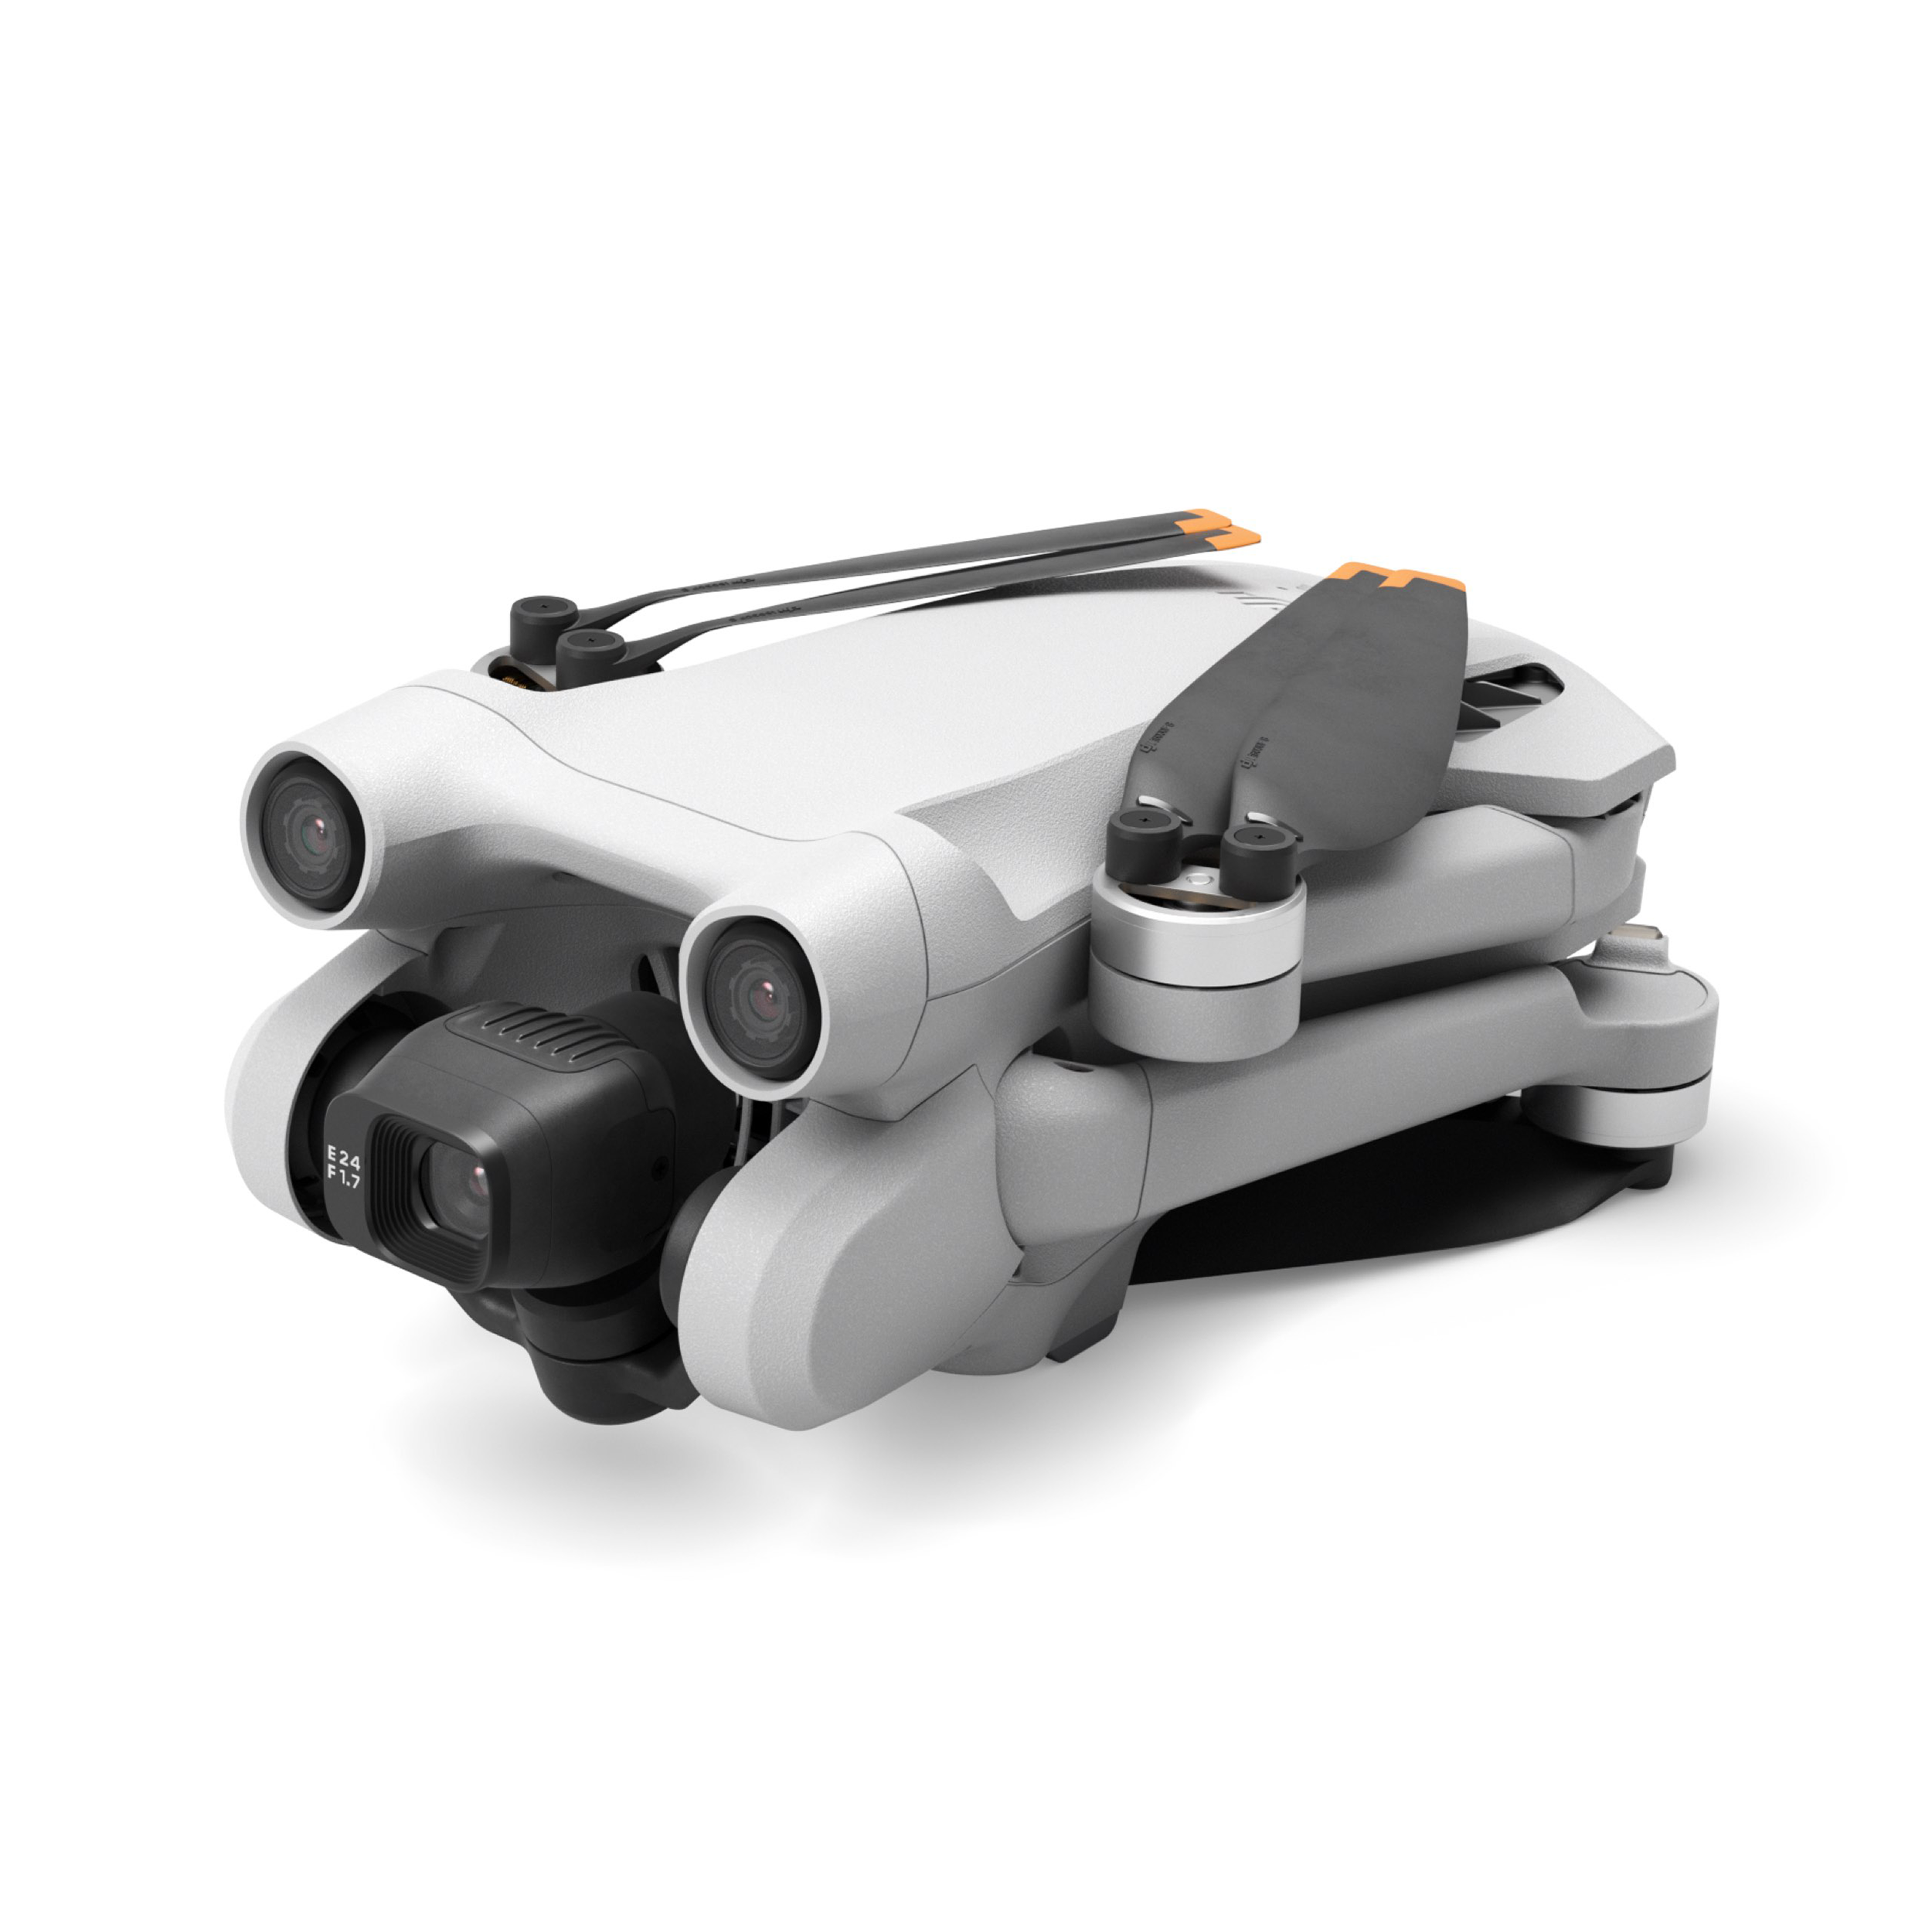 DJI Mini 3 – DJI Mini drone caméra léger et pliable avec vidéo 4K HDR,  temps de